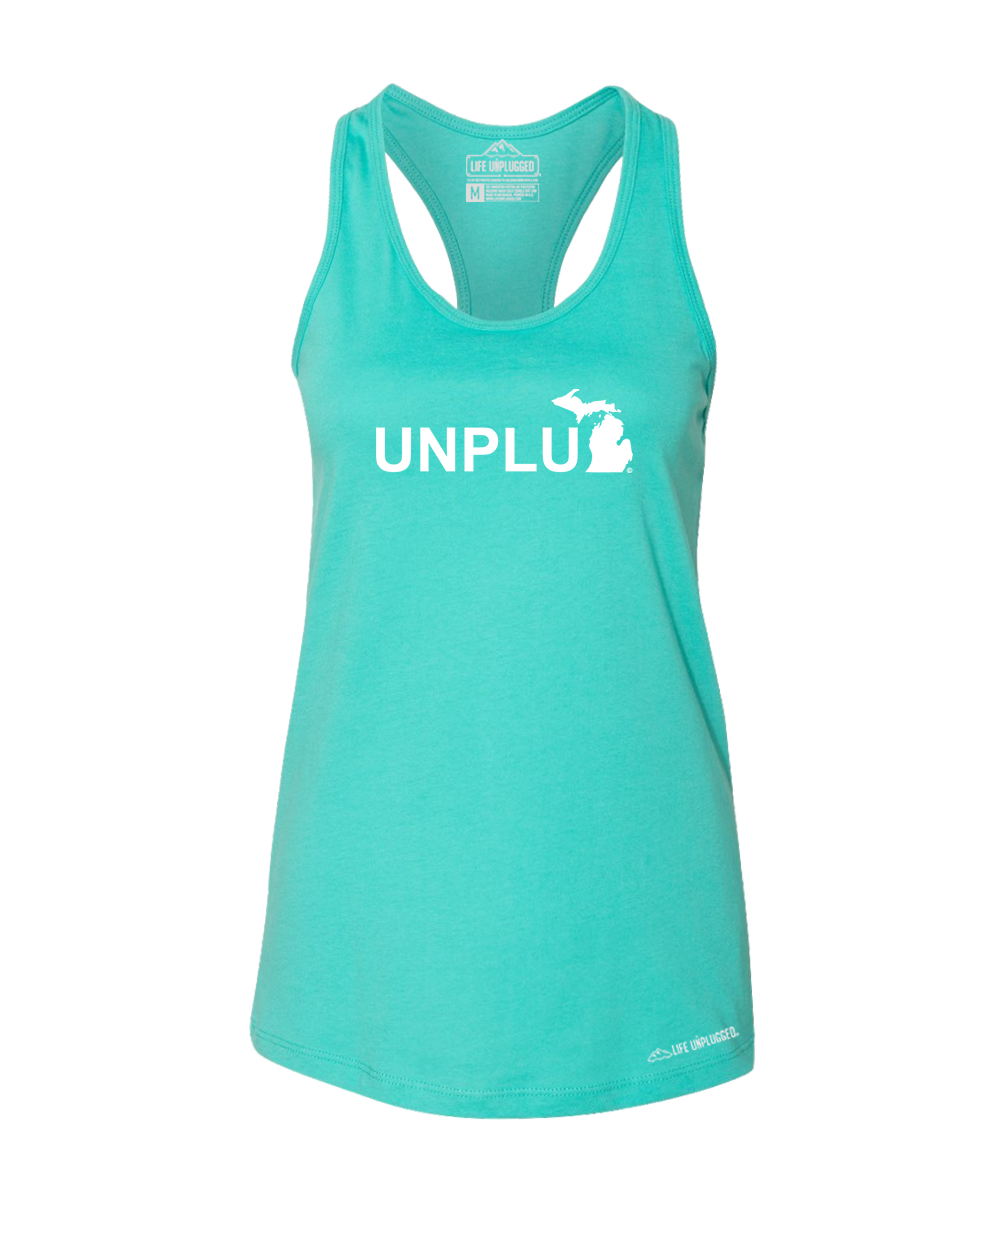 Unplug (MI) Premium Women's Relaxed Fit Racerback Tank Top - Life Unplugged